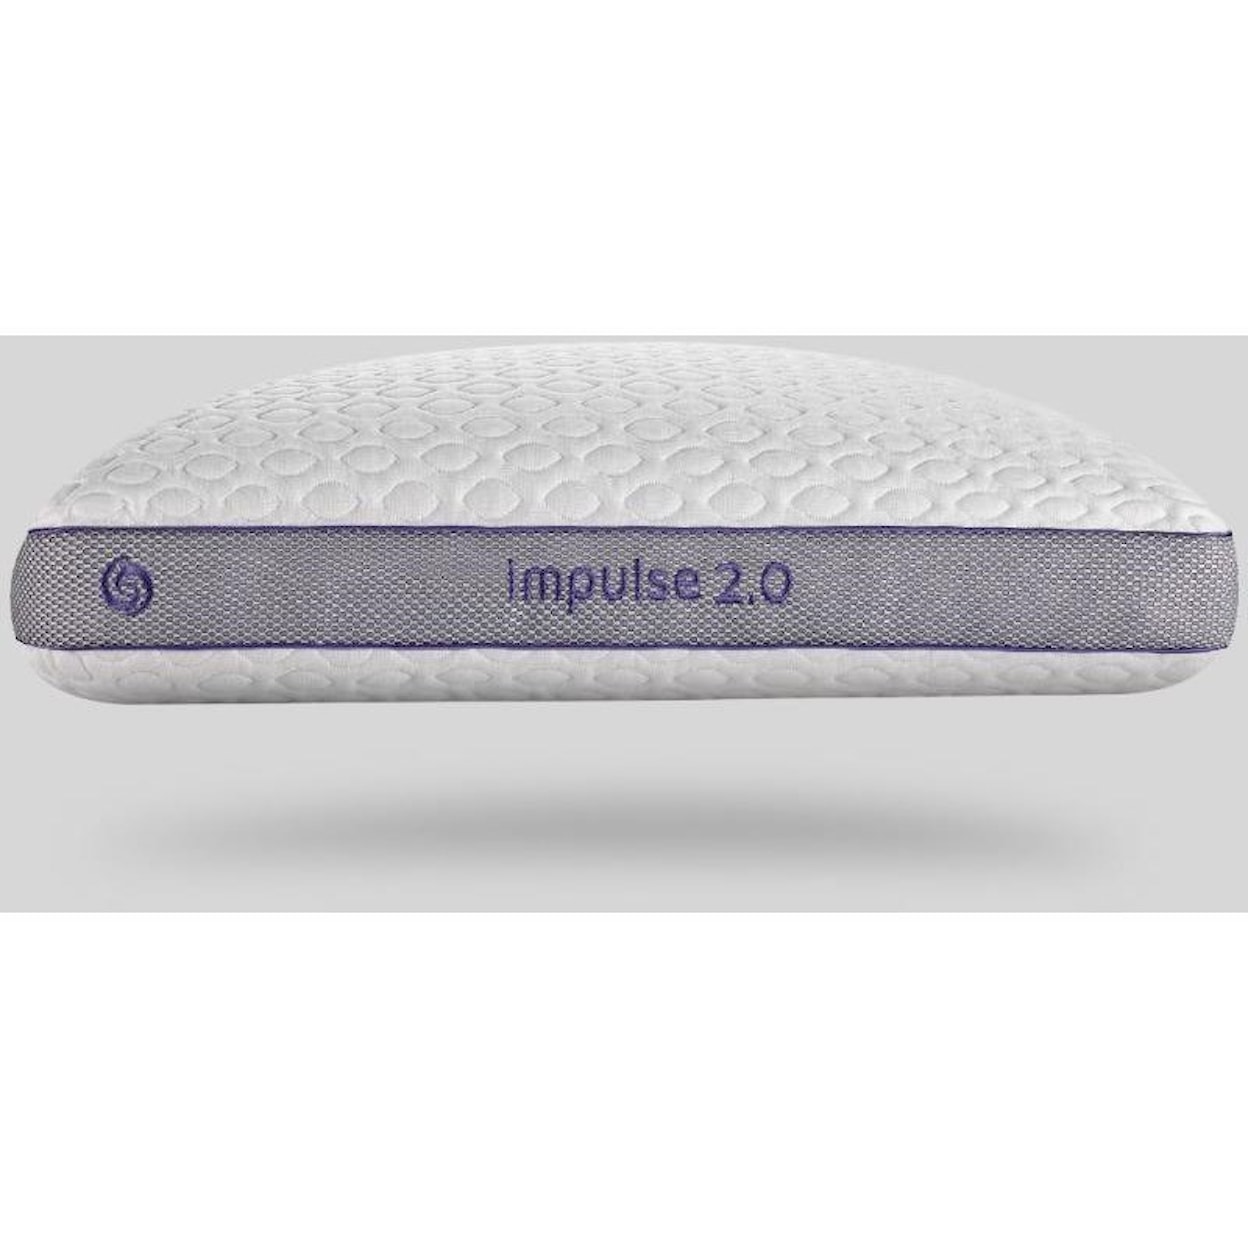 Bedgear Impulse 2.0 Pillow Impulse 2.0 Pillow